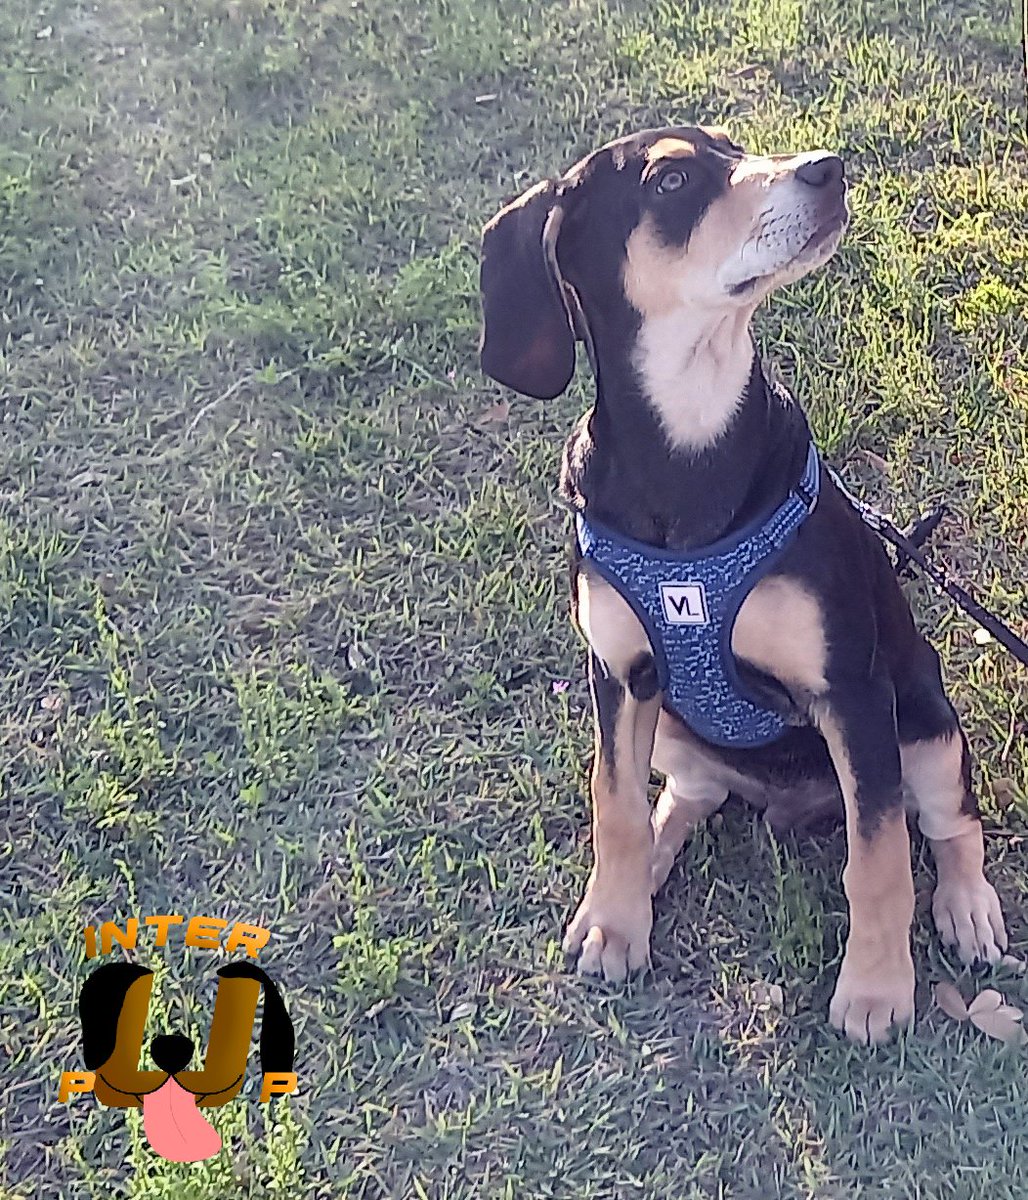 James enjoying the sunshine! | James Bean

#InterPup #JamesBean #Puppy #Pup #Dog #PuppyPictures #Beagle #Coonhound #BlackandTan #BlackandTanCoonhound #doggy #pet #mydog #doglover #pupper #bark #spoiled #dogstagram #dogsofinstagram #puppiesofinstagram #doglife #dogs #ilovemydog